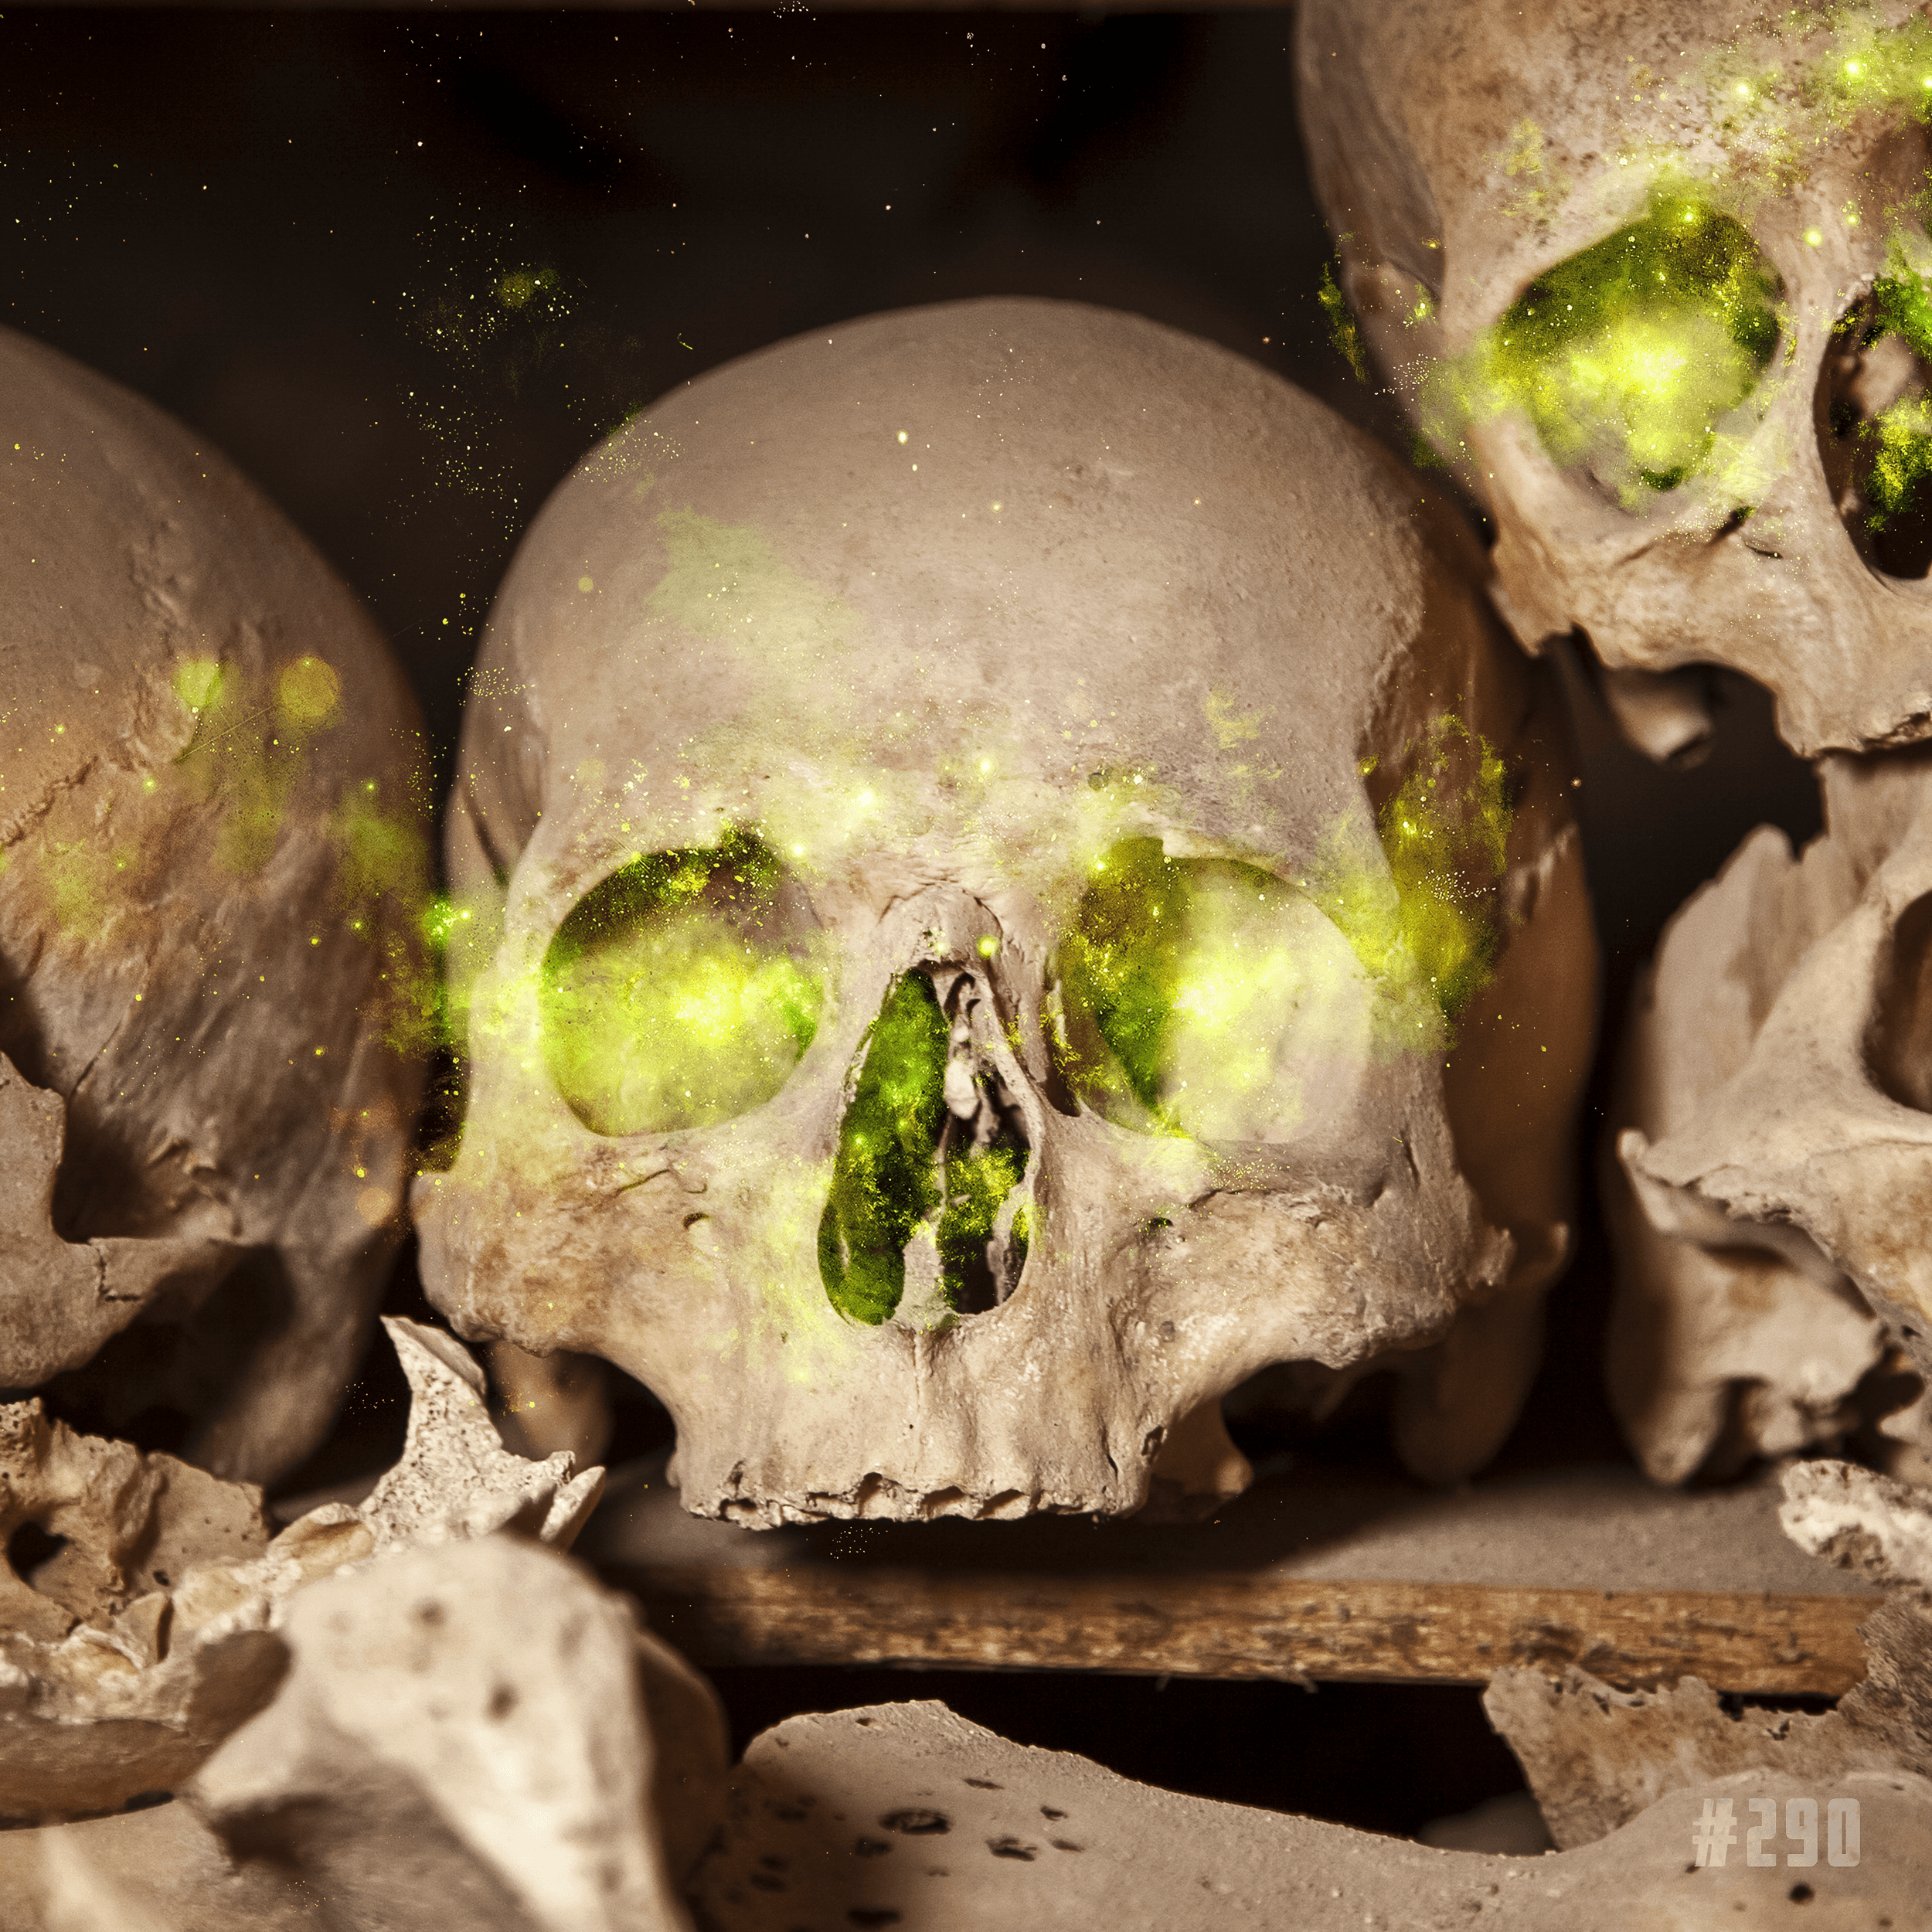 Skulls On ETH #290